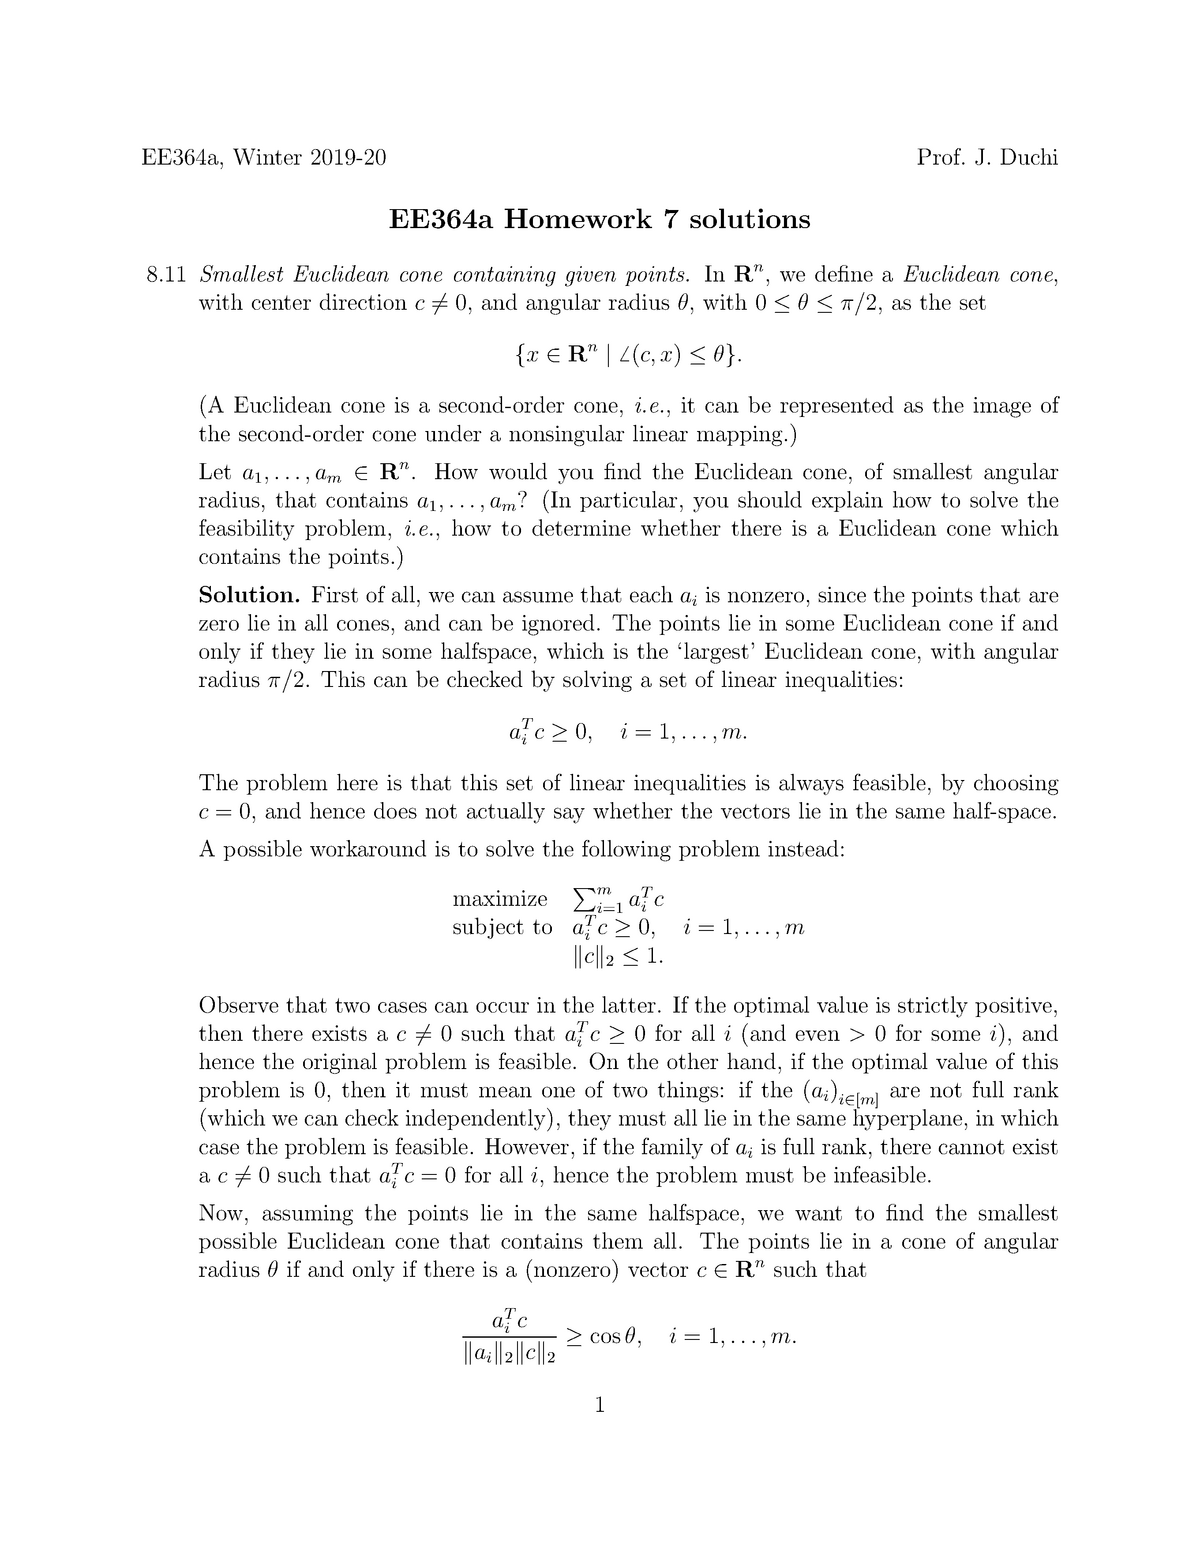 ee364a homework 7 solutions